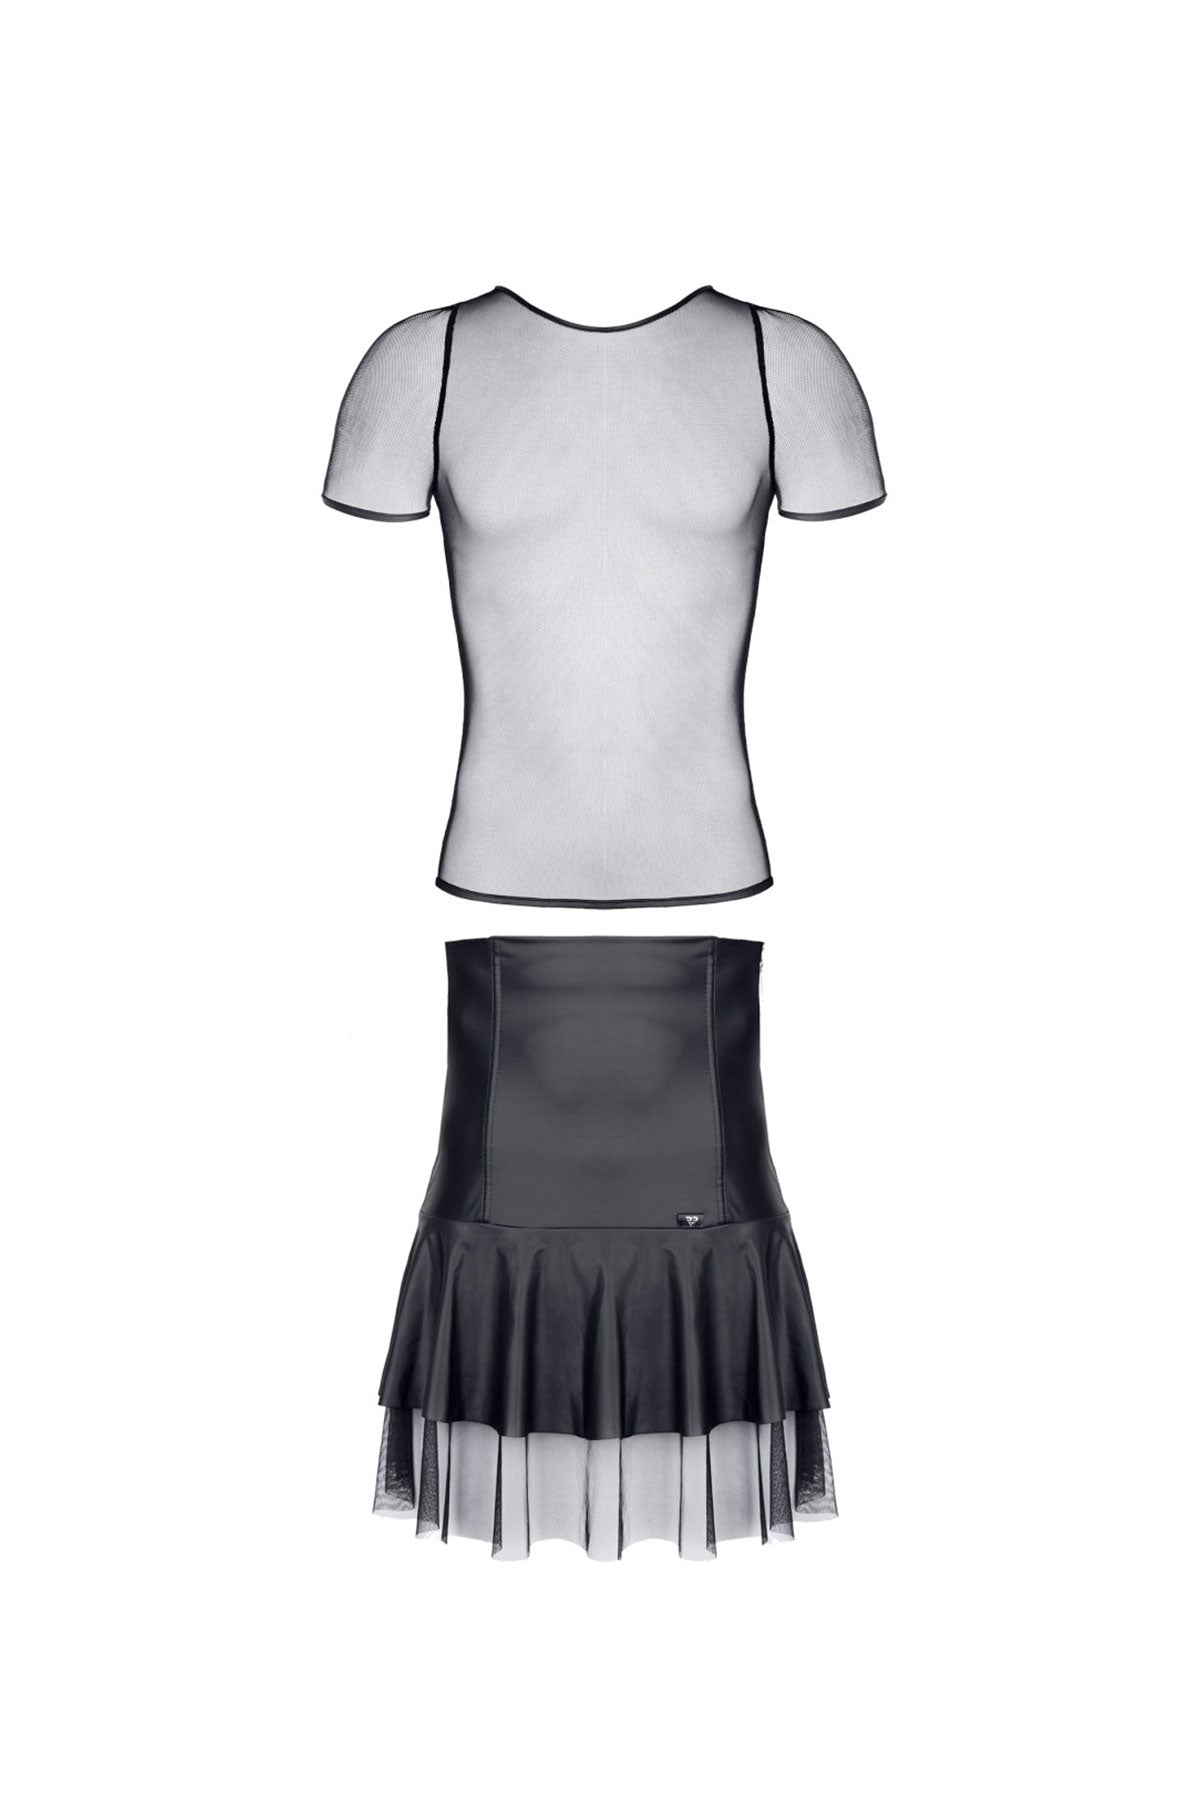 High Waisted Black Skirt with T-Shirt